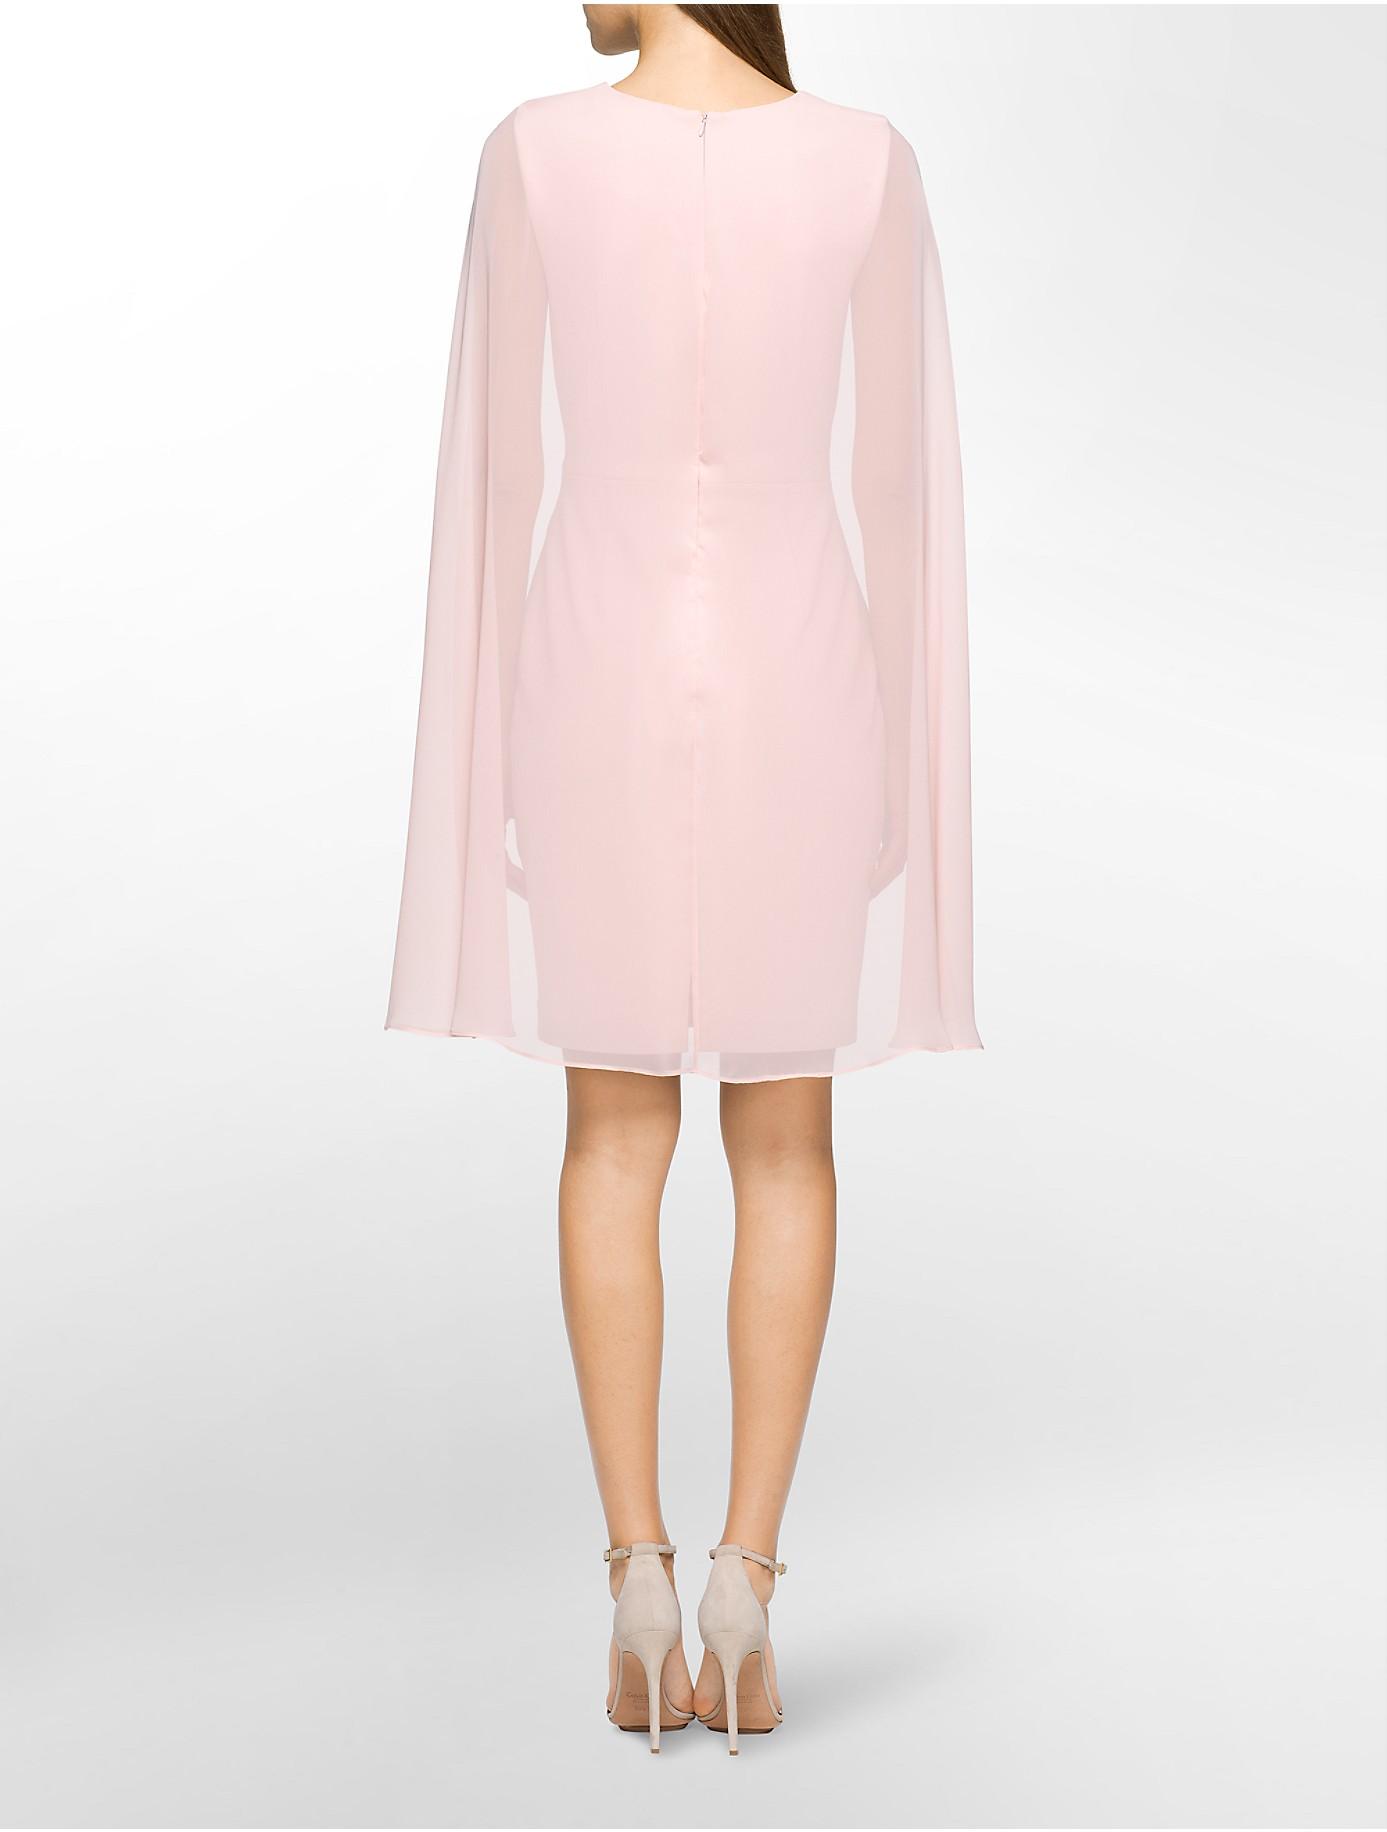 calvin klein pale pink dress